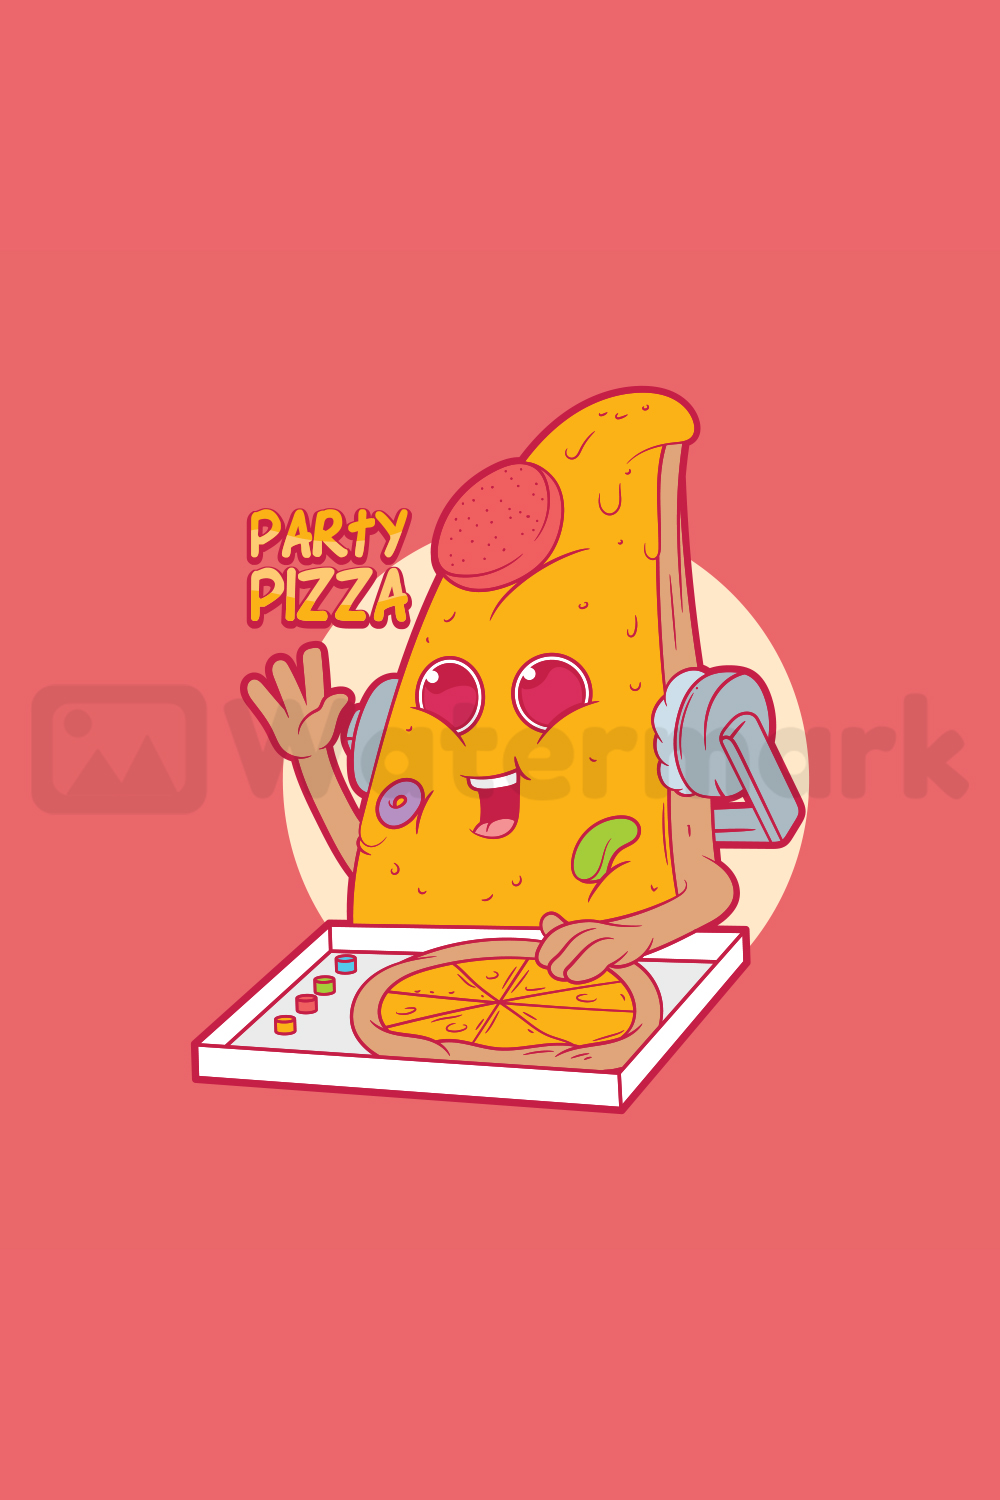 Party Pizza Vector Graphics Design pinterest image.